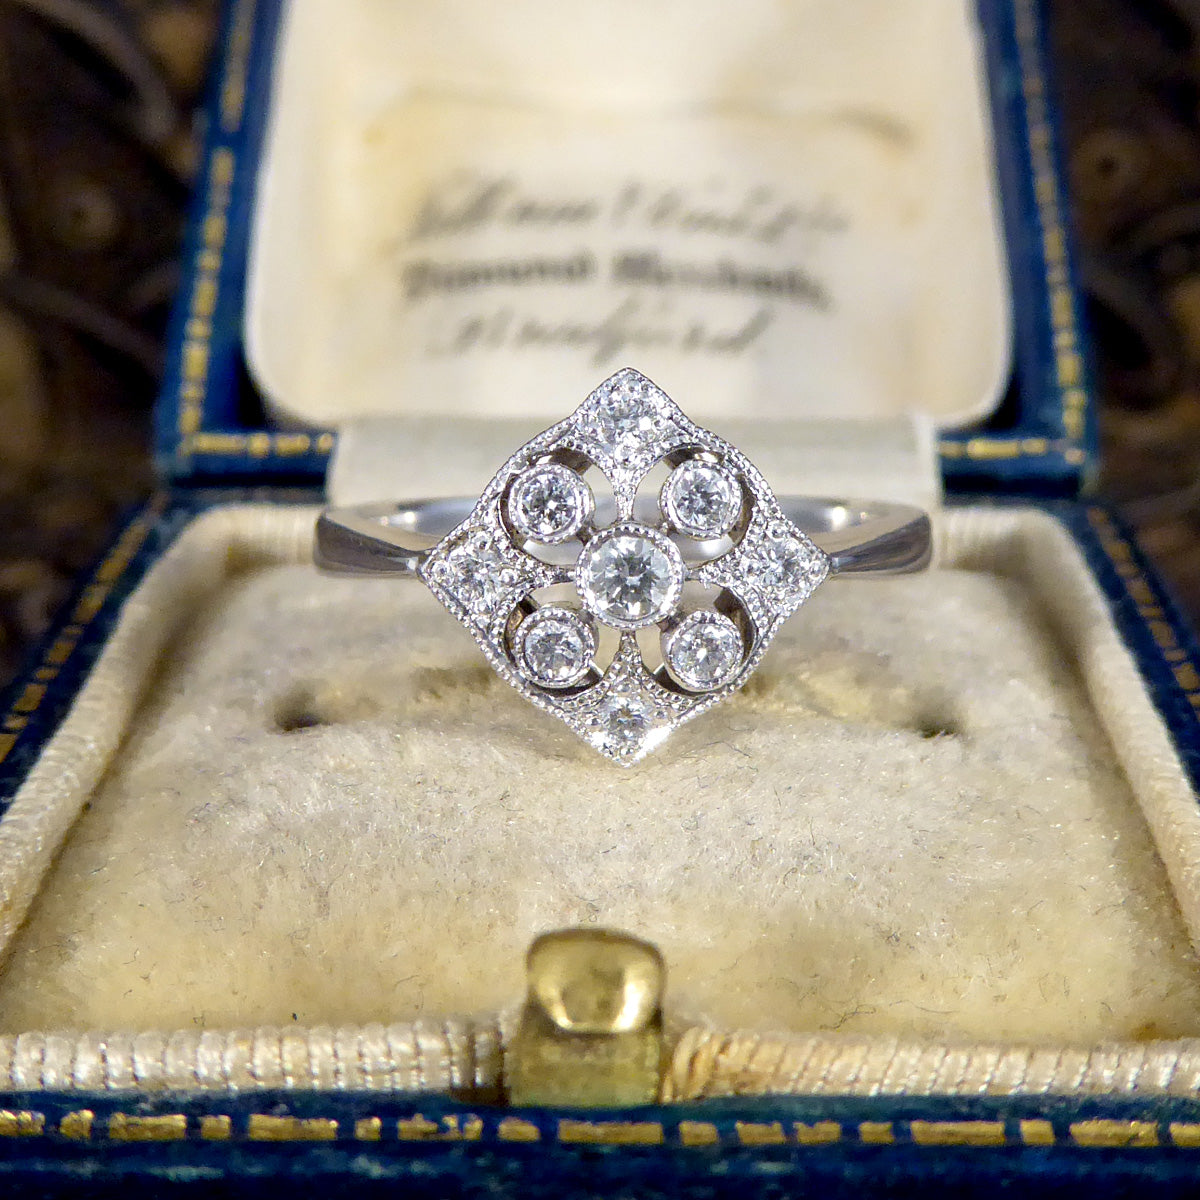 1920's Period Replica Geometric Pattern Diamond Ring in 18ct White Gold